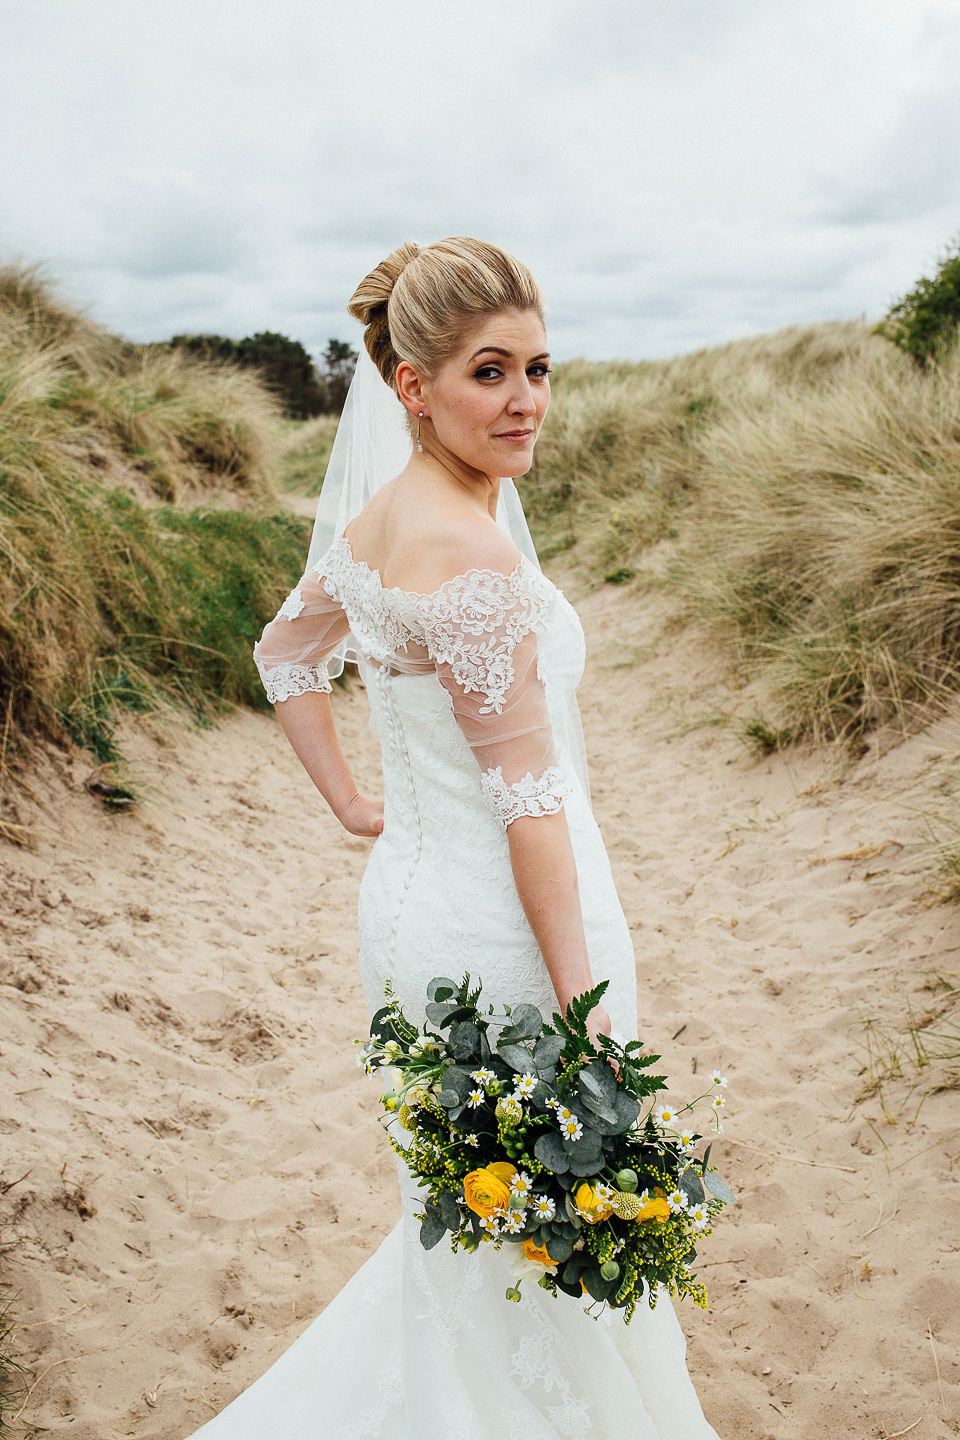 Jonny Draper Photography, Pronovias wedding dress, Newton Hall Northumberland wedding venue, Spring wedding, coastal wedding, seaside wedding